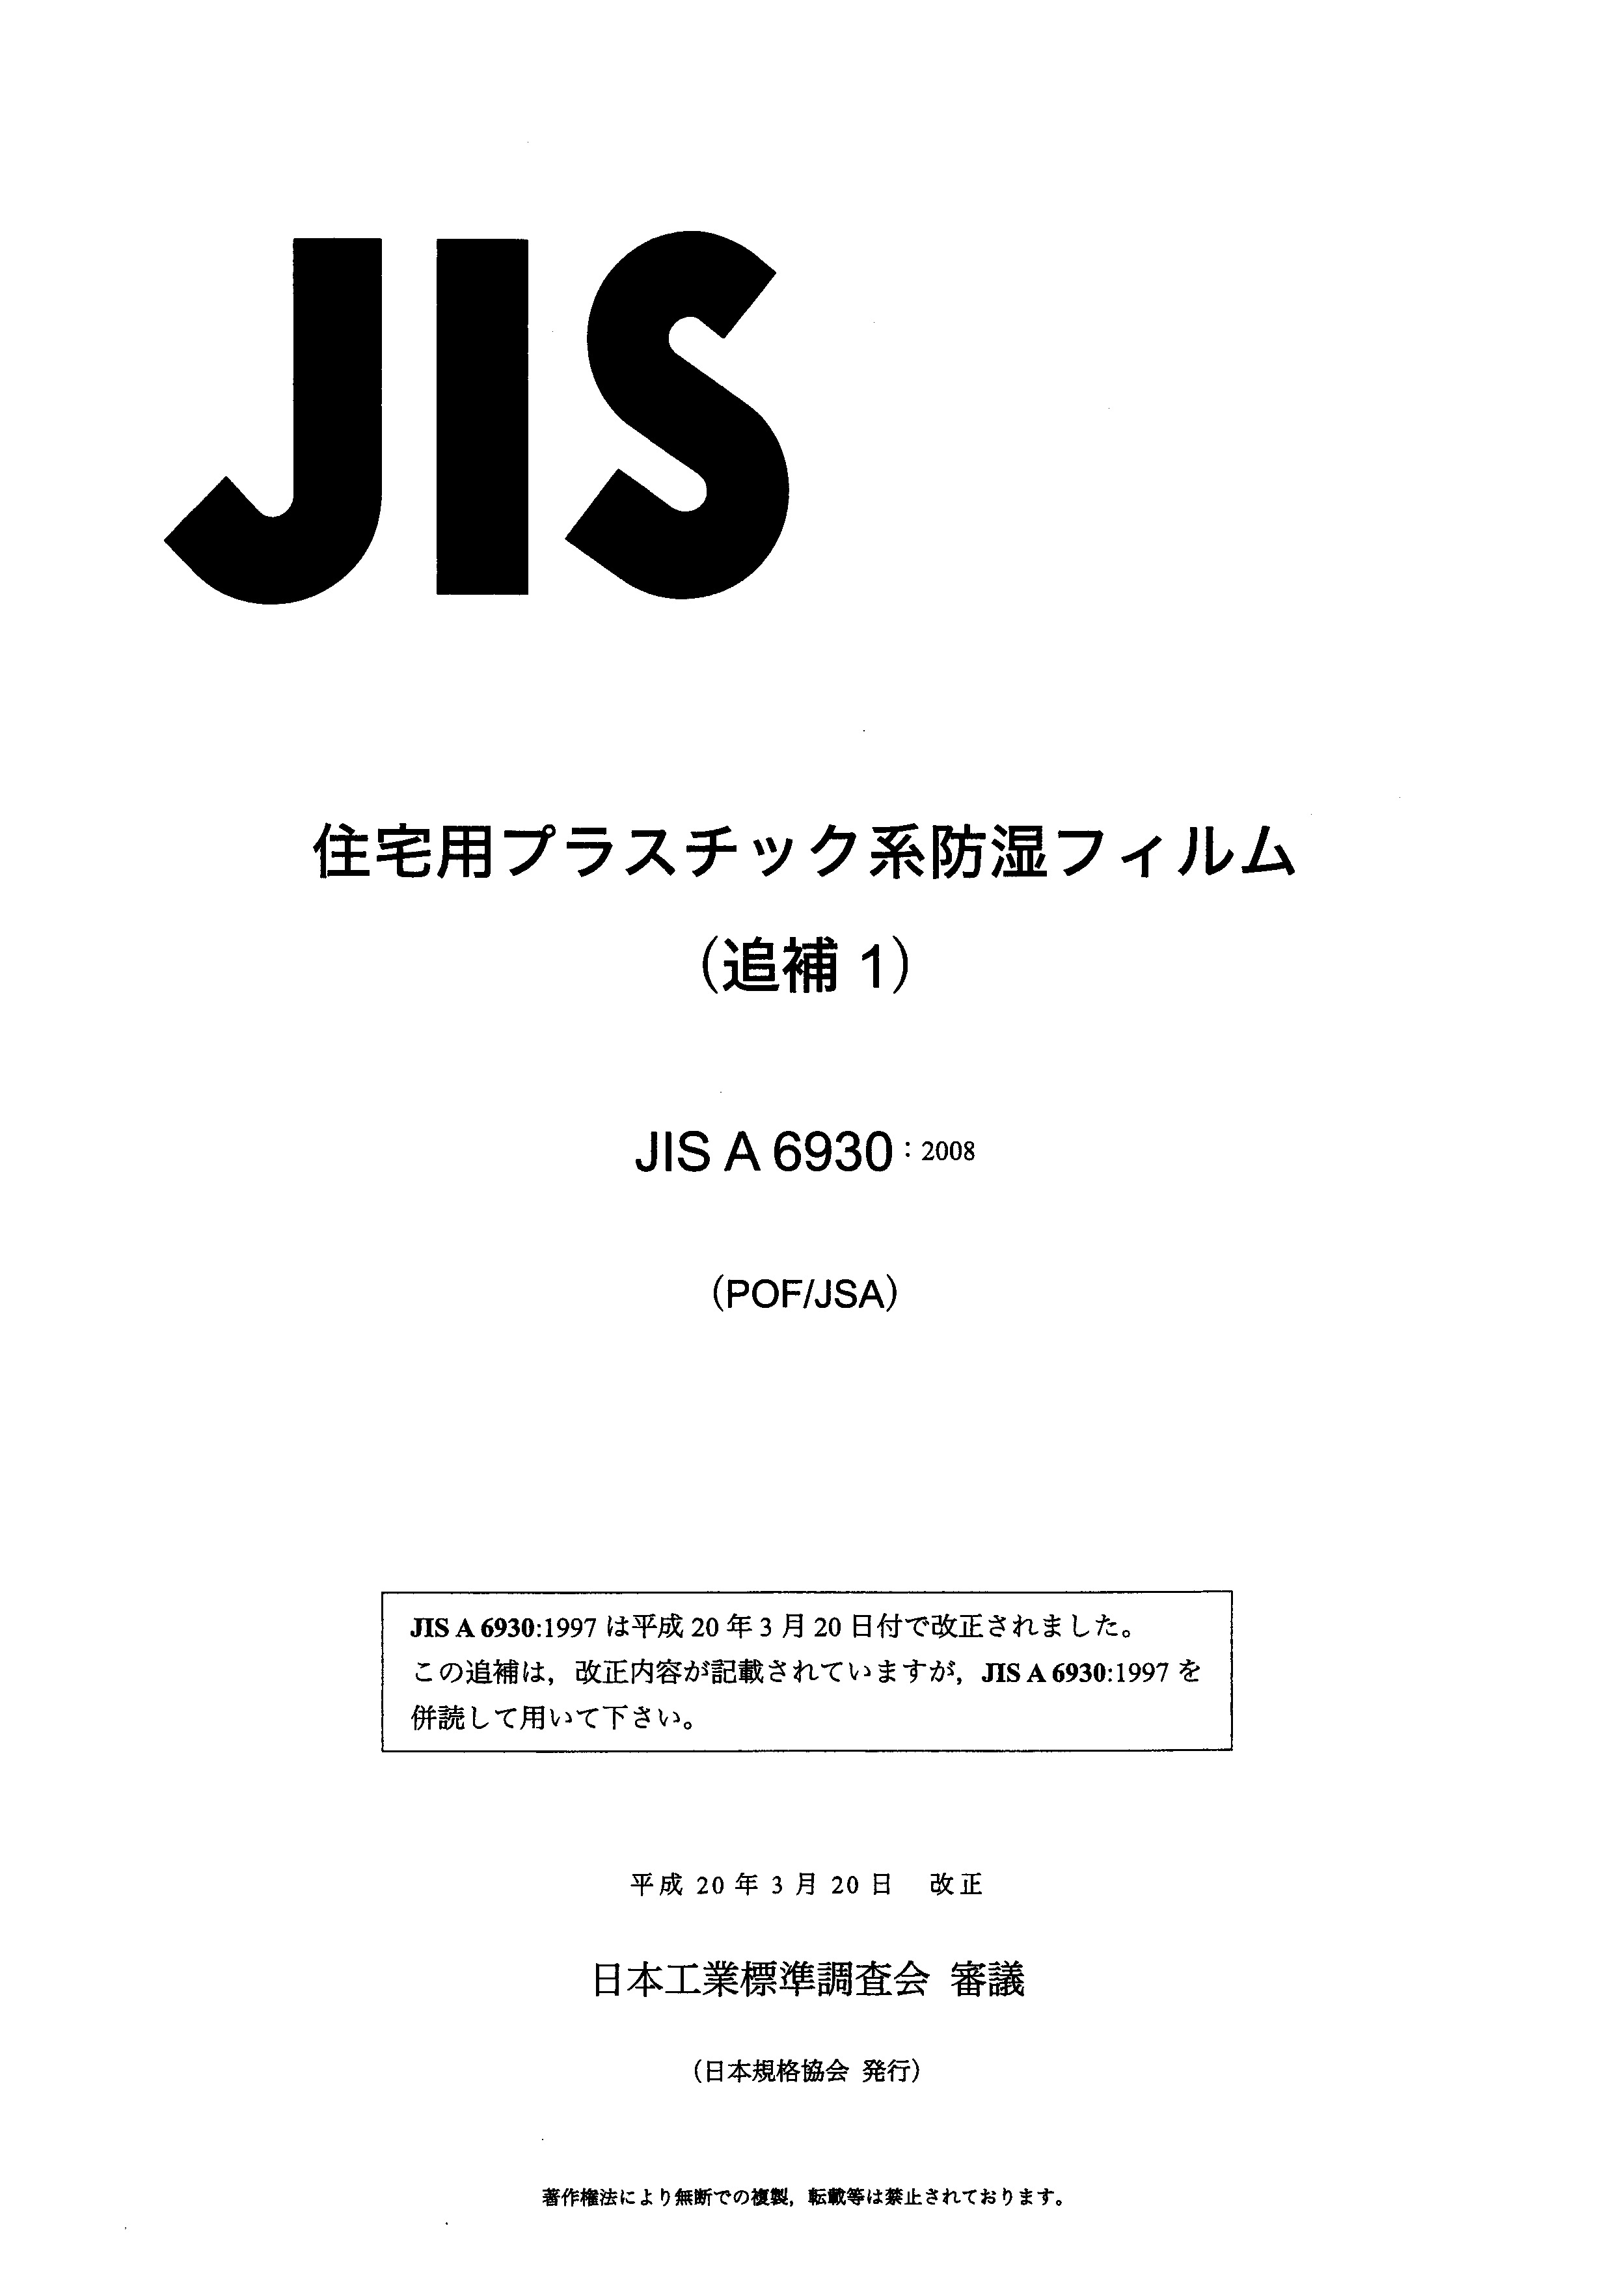 JIS A 6930 AMD 1:2008封面图